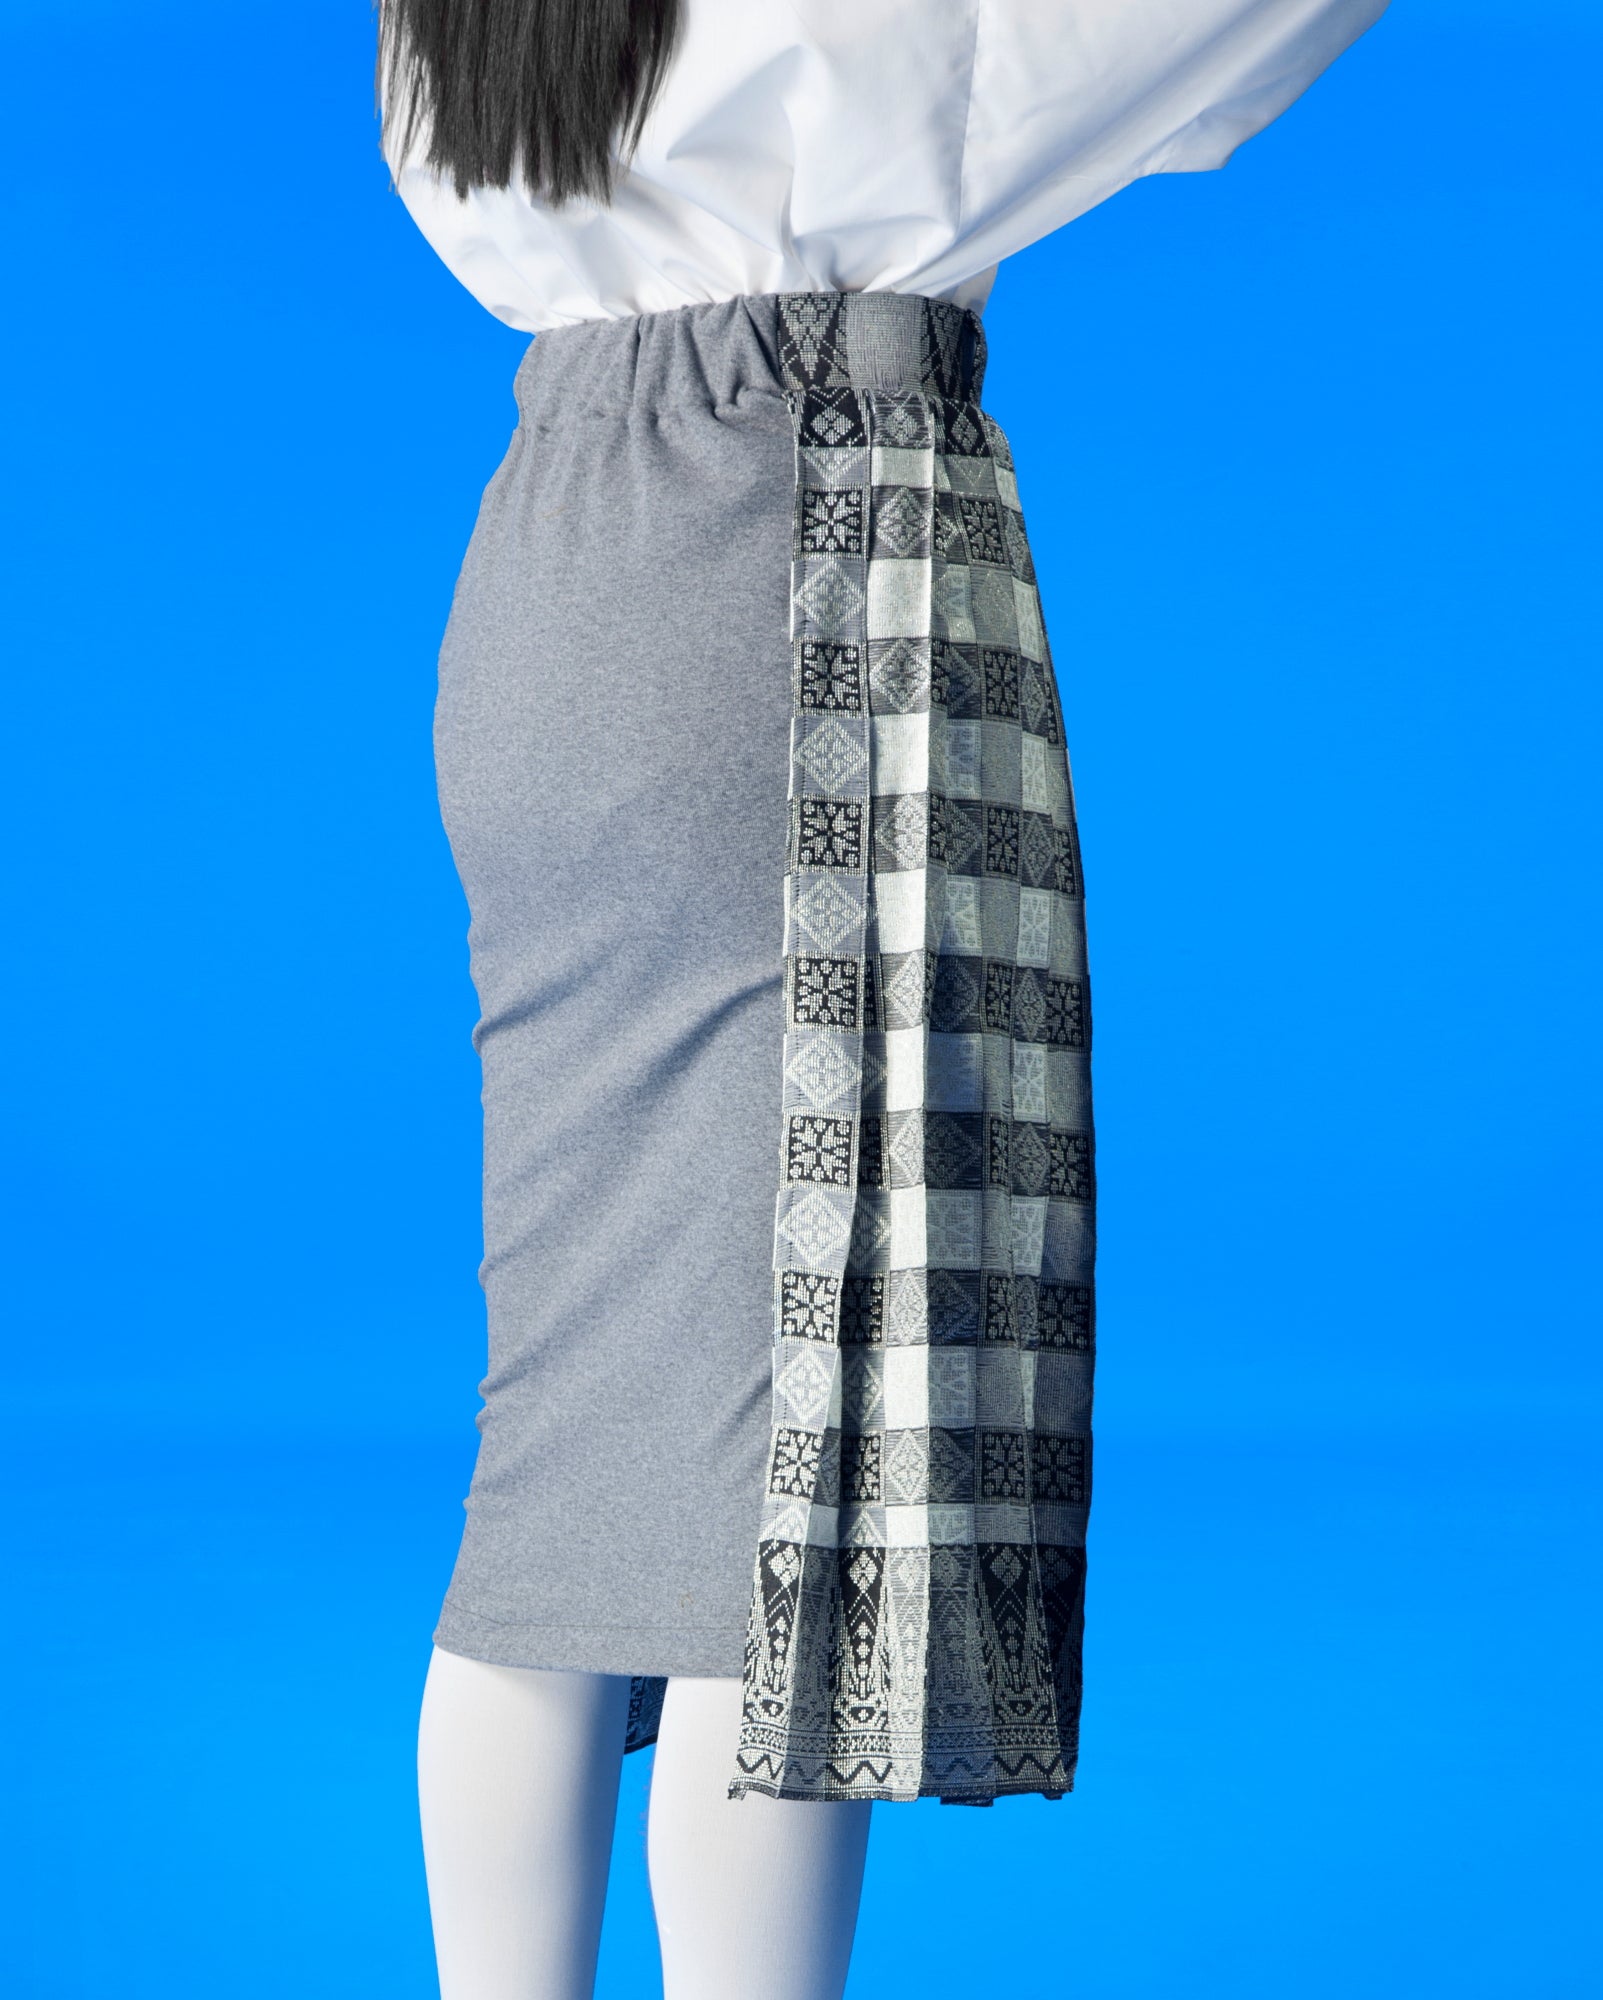 Upcycled Kipas Songket Skirt in Grey